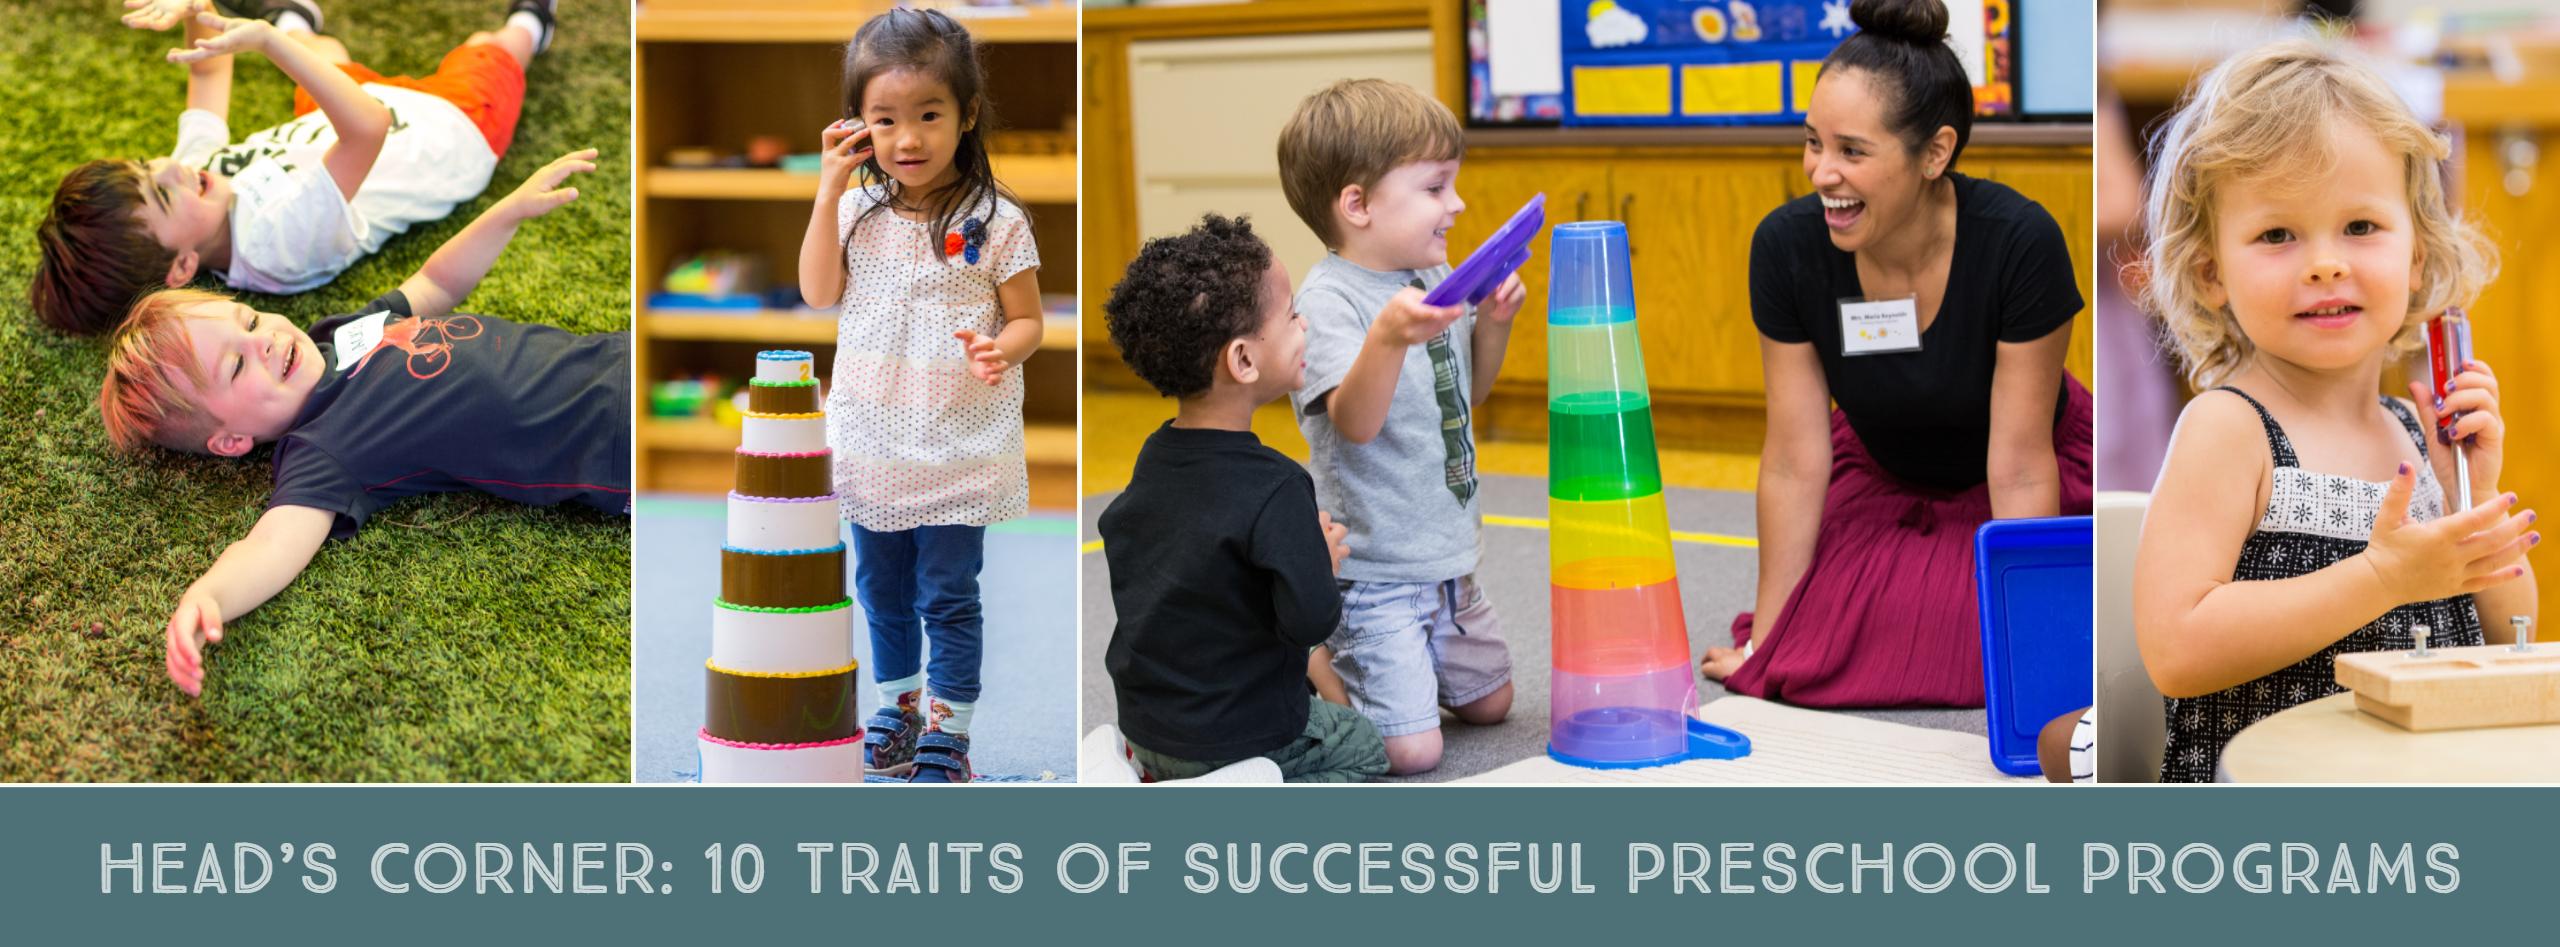 Head's Corner: 10 Traits of Successful Preschool Programs with collage of preschoolers